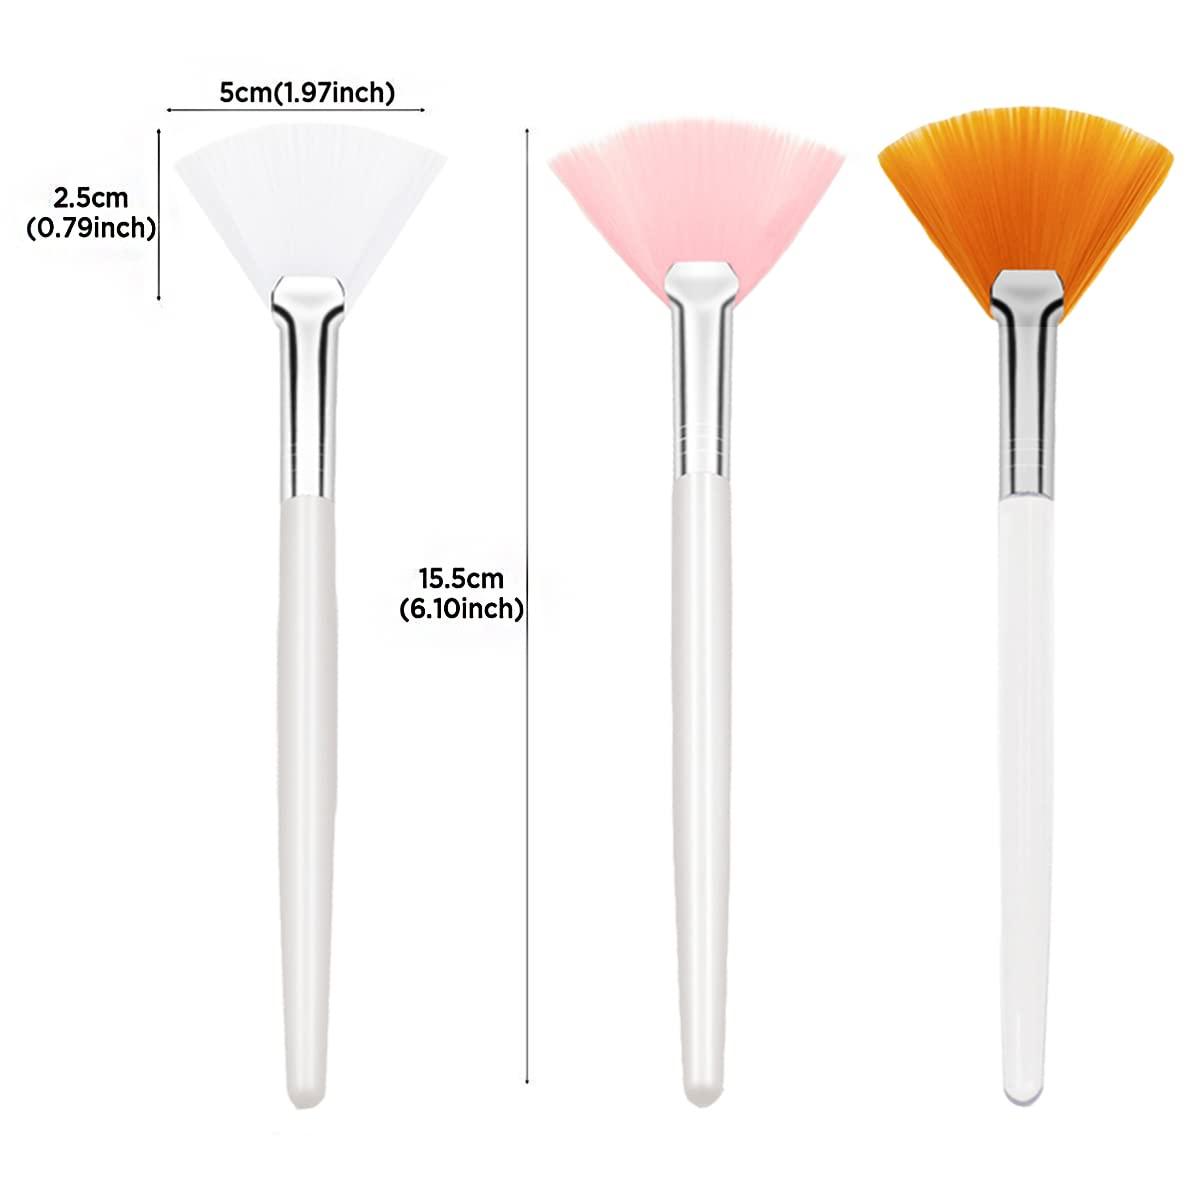 Fan Brushes - Brushes By Shape - Brushes & Tools